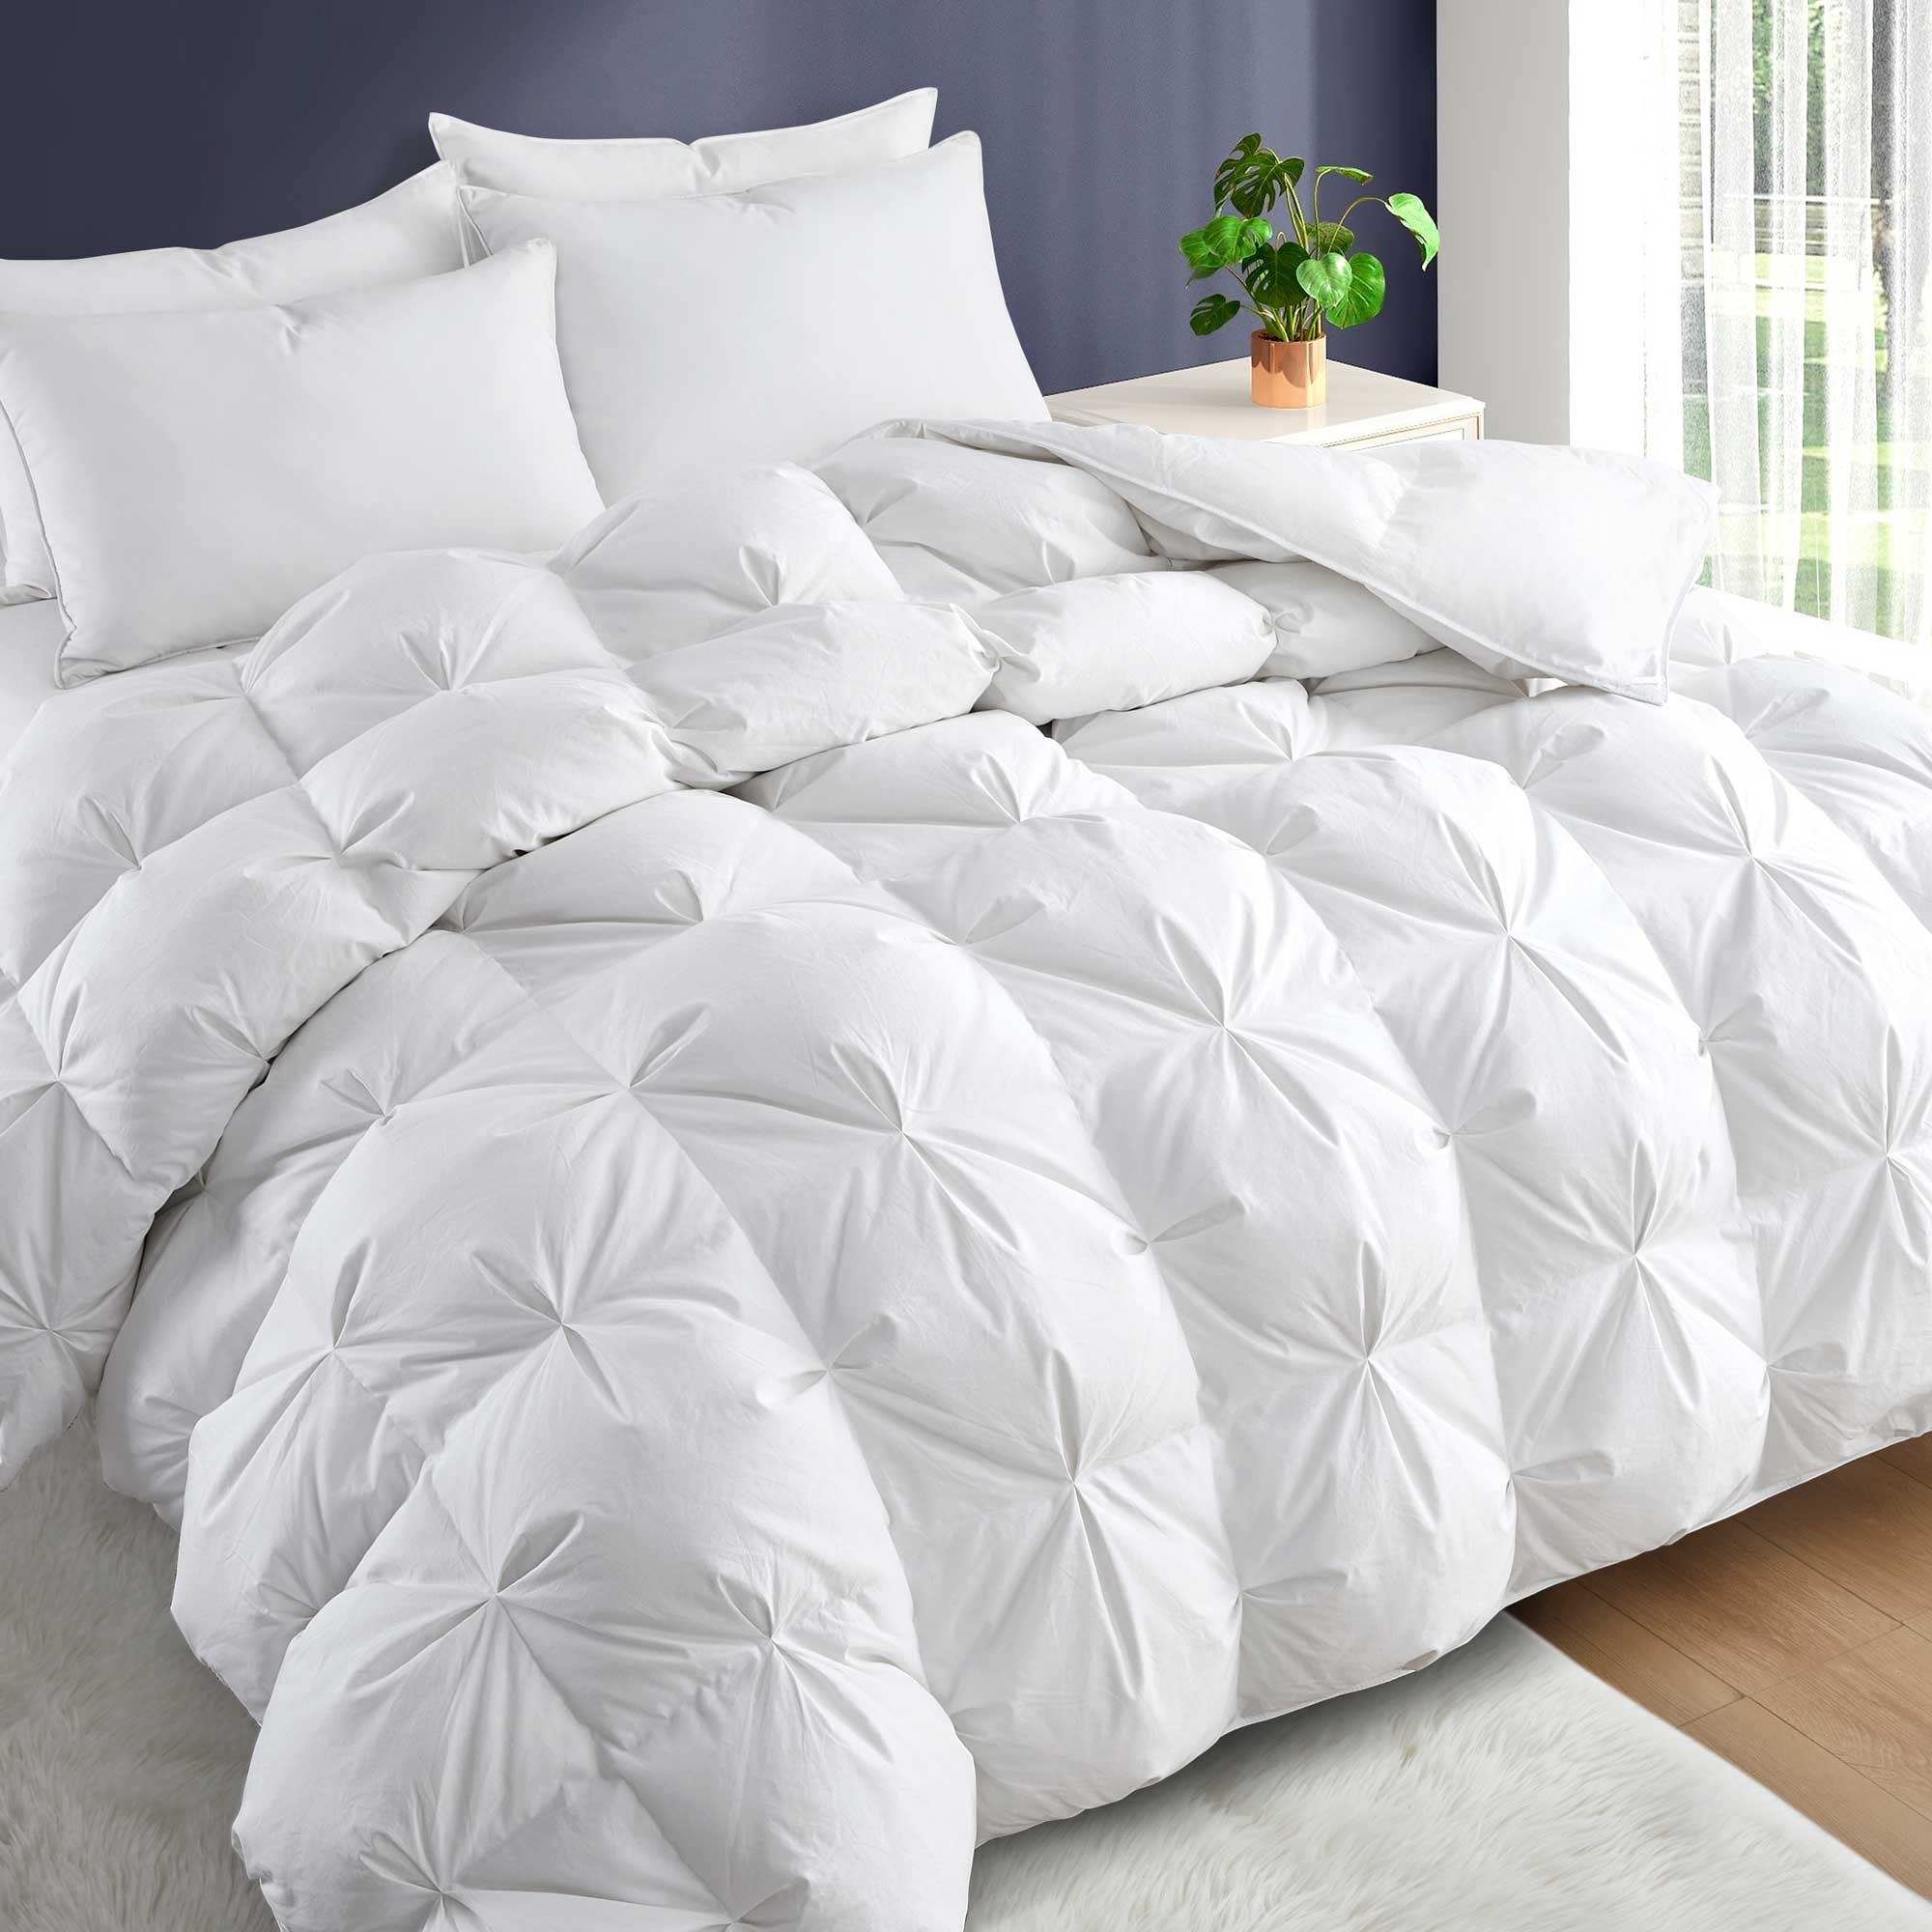 Luxury 800 Fill Power White Goose Down Winter Comforter-Extra Warm Super Soft Heavy Weight Comforter - White, Full